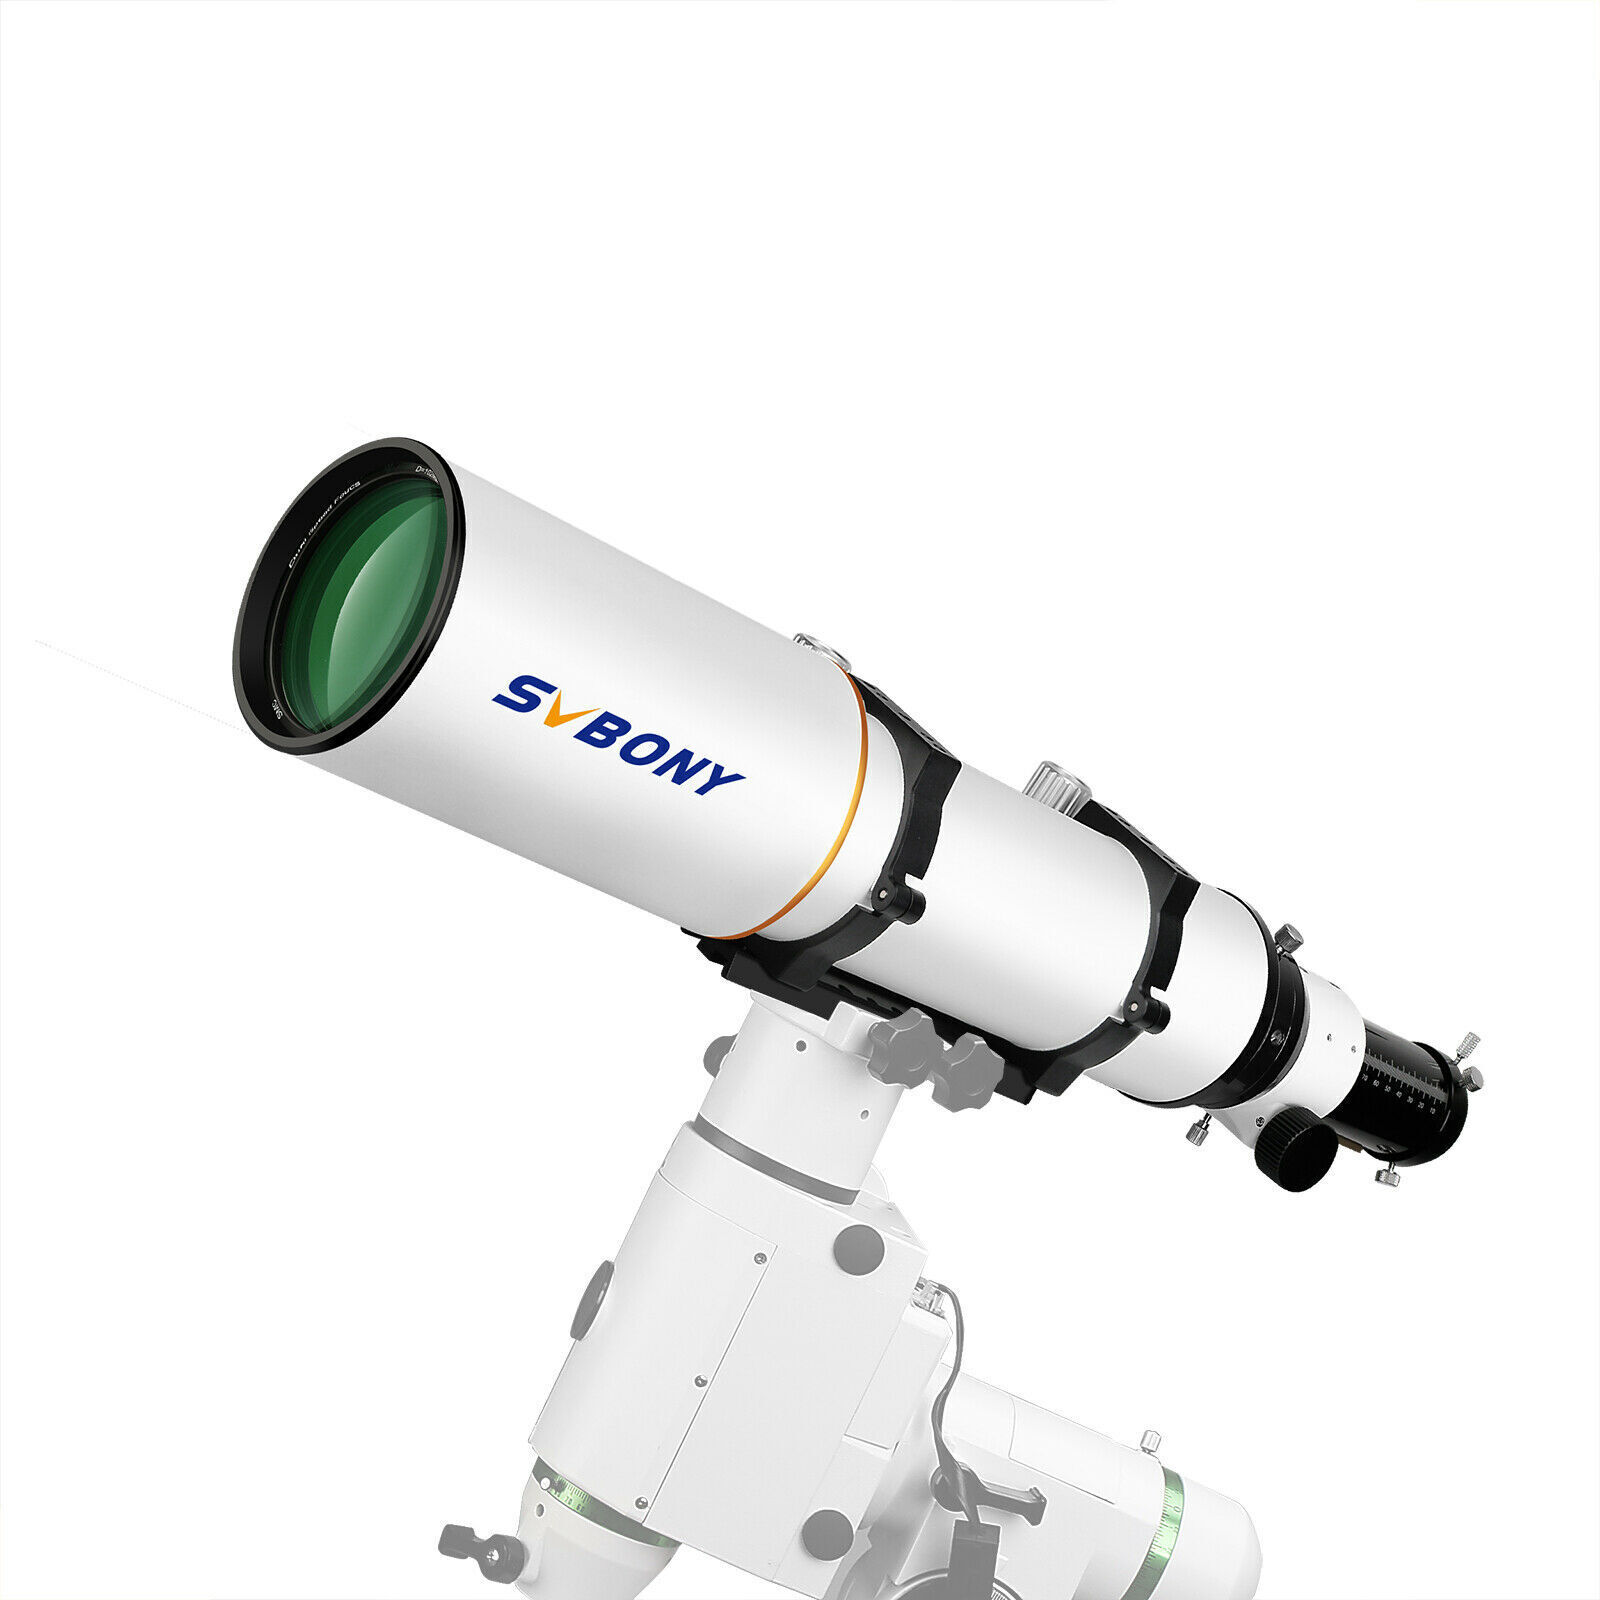 SVBONY SV503 102F7 ED Telescope OTA Professional astronomy Refractor Achromatic